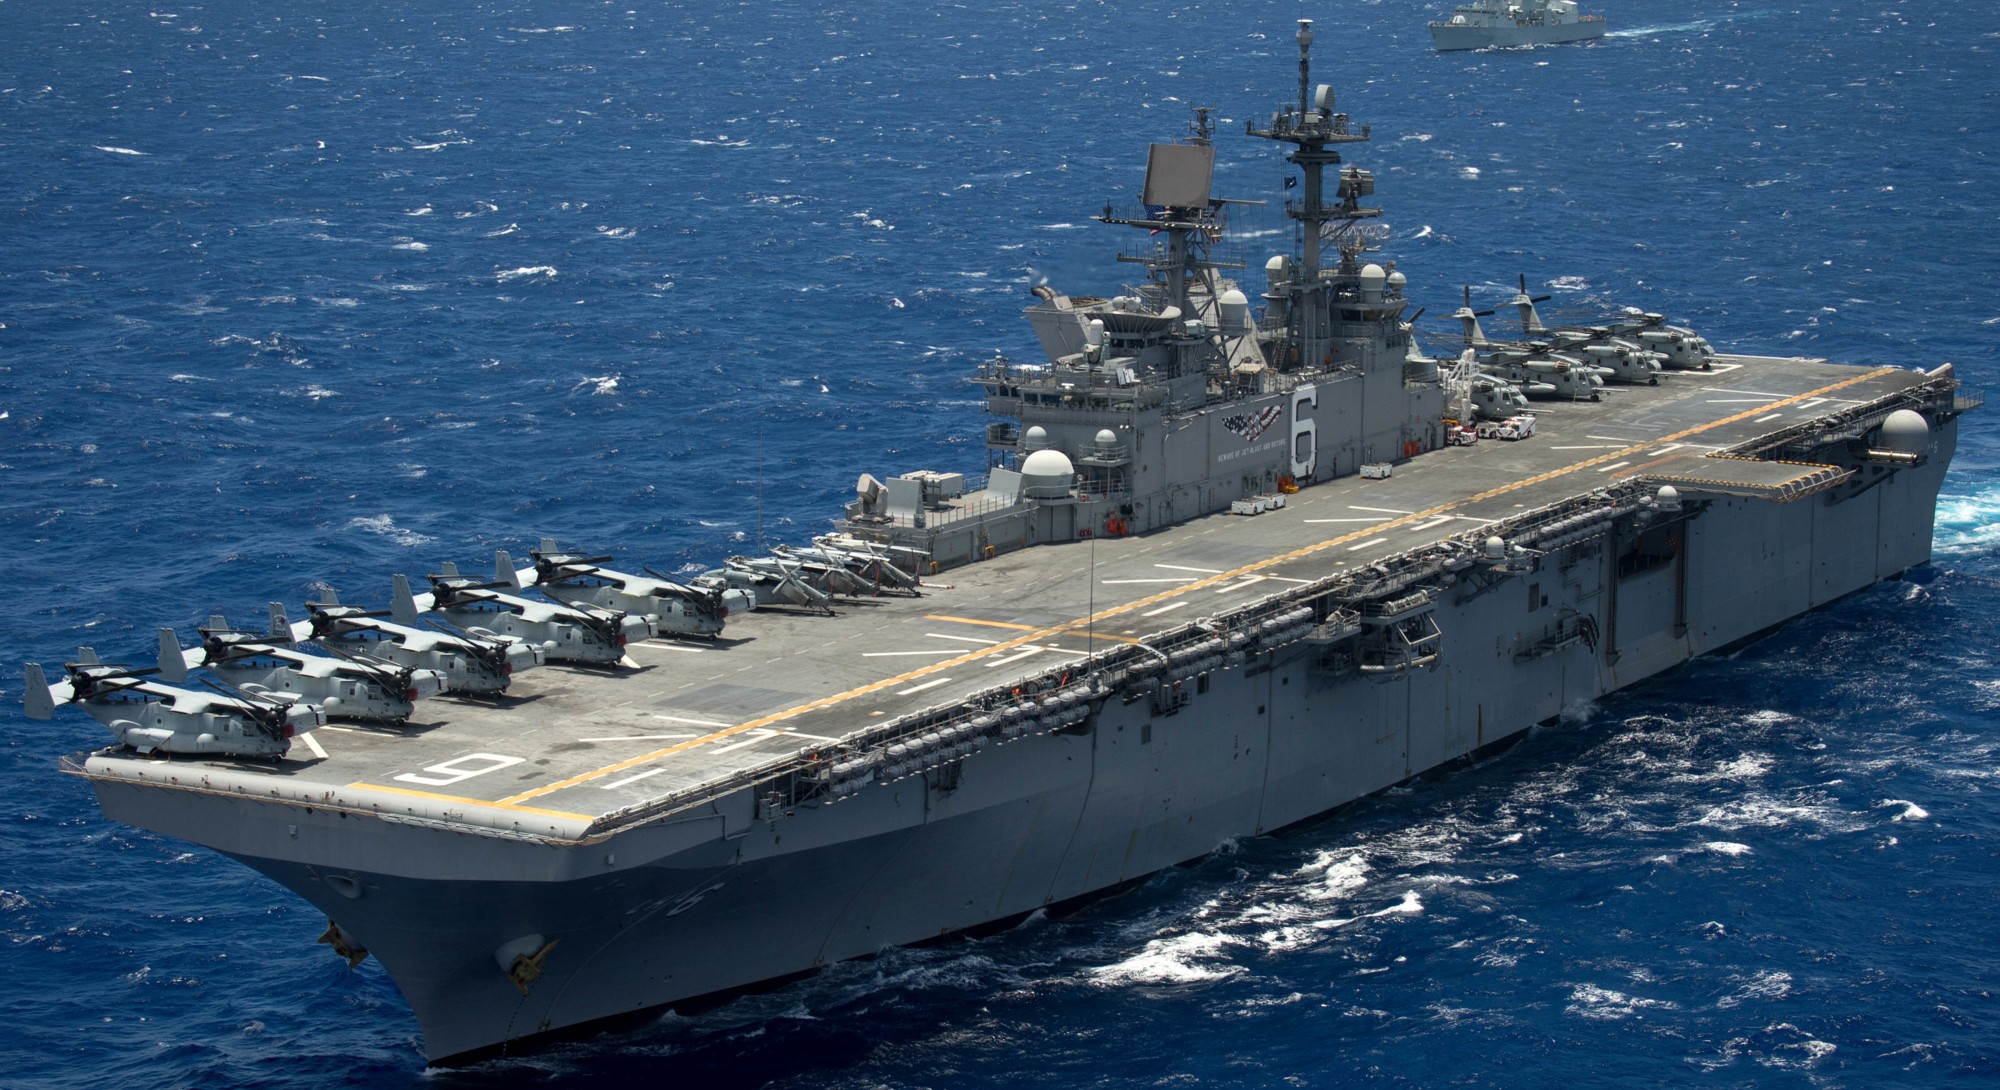 lha-6 uss america amphibious assault ship us navy huntington ingalls shipbuilding pascagoula 120x